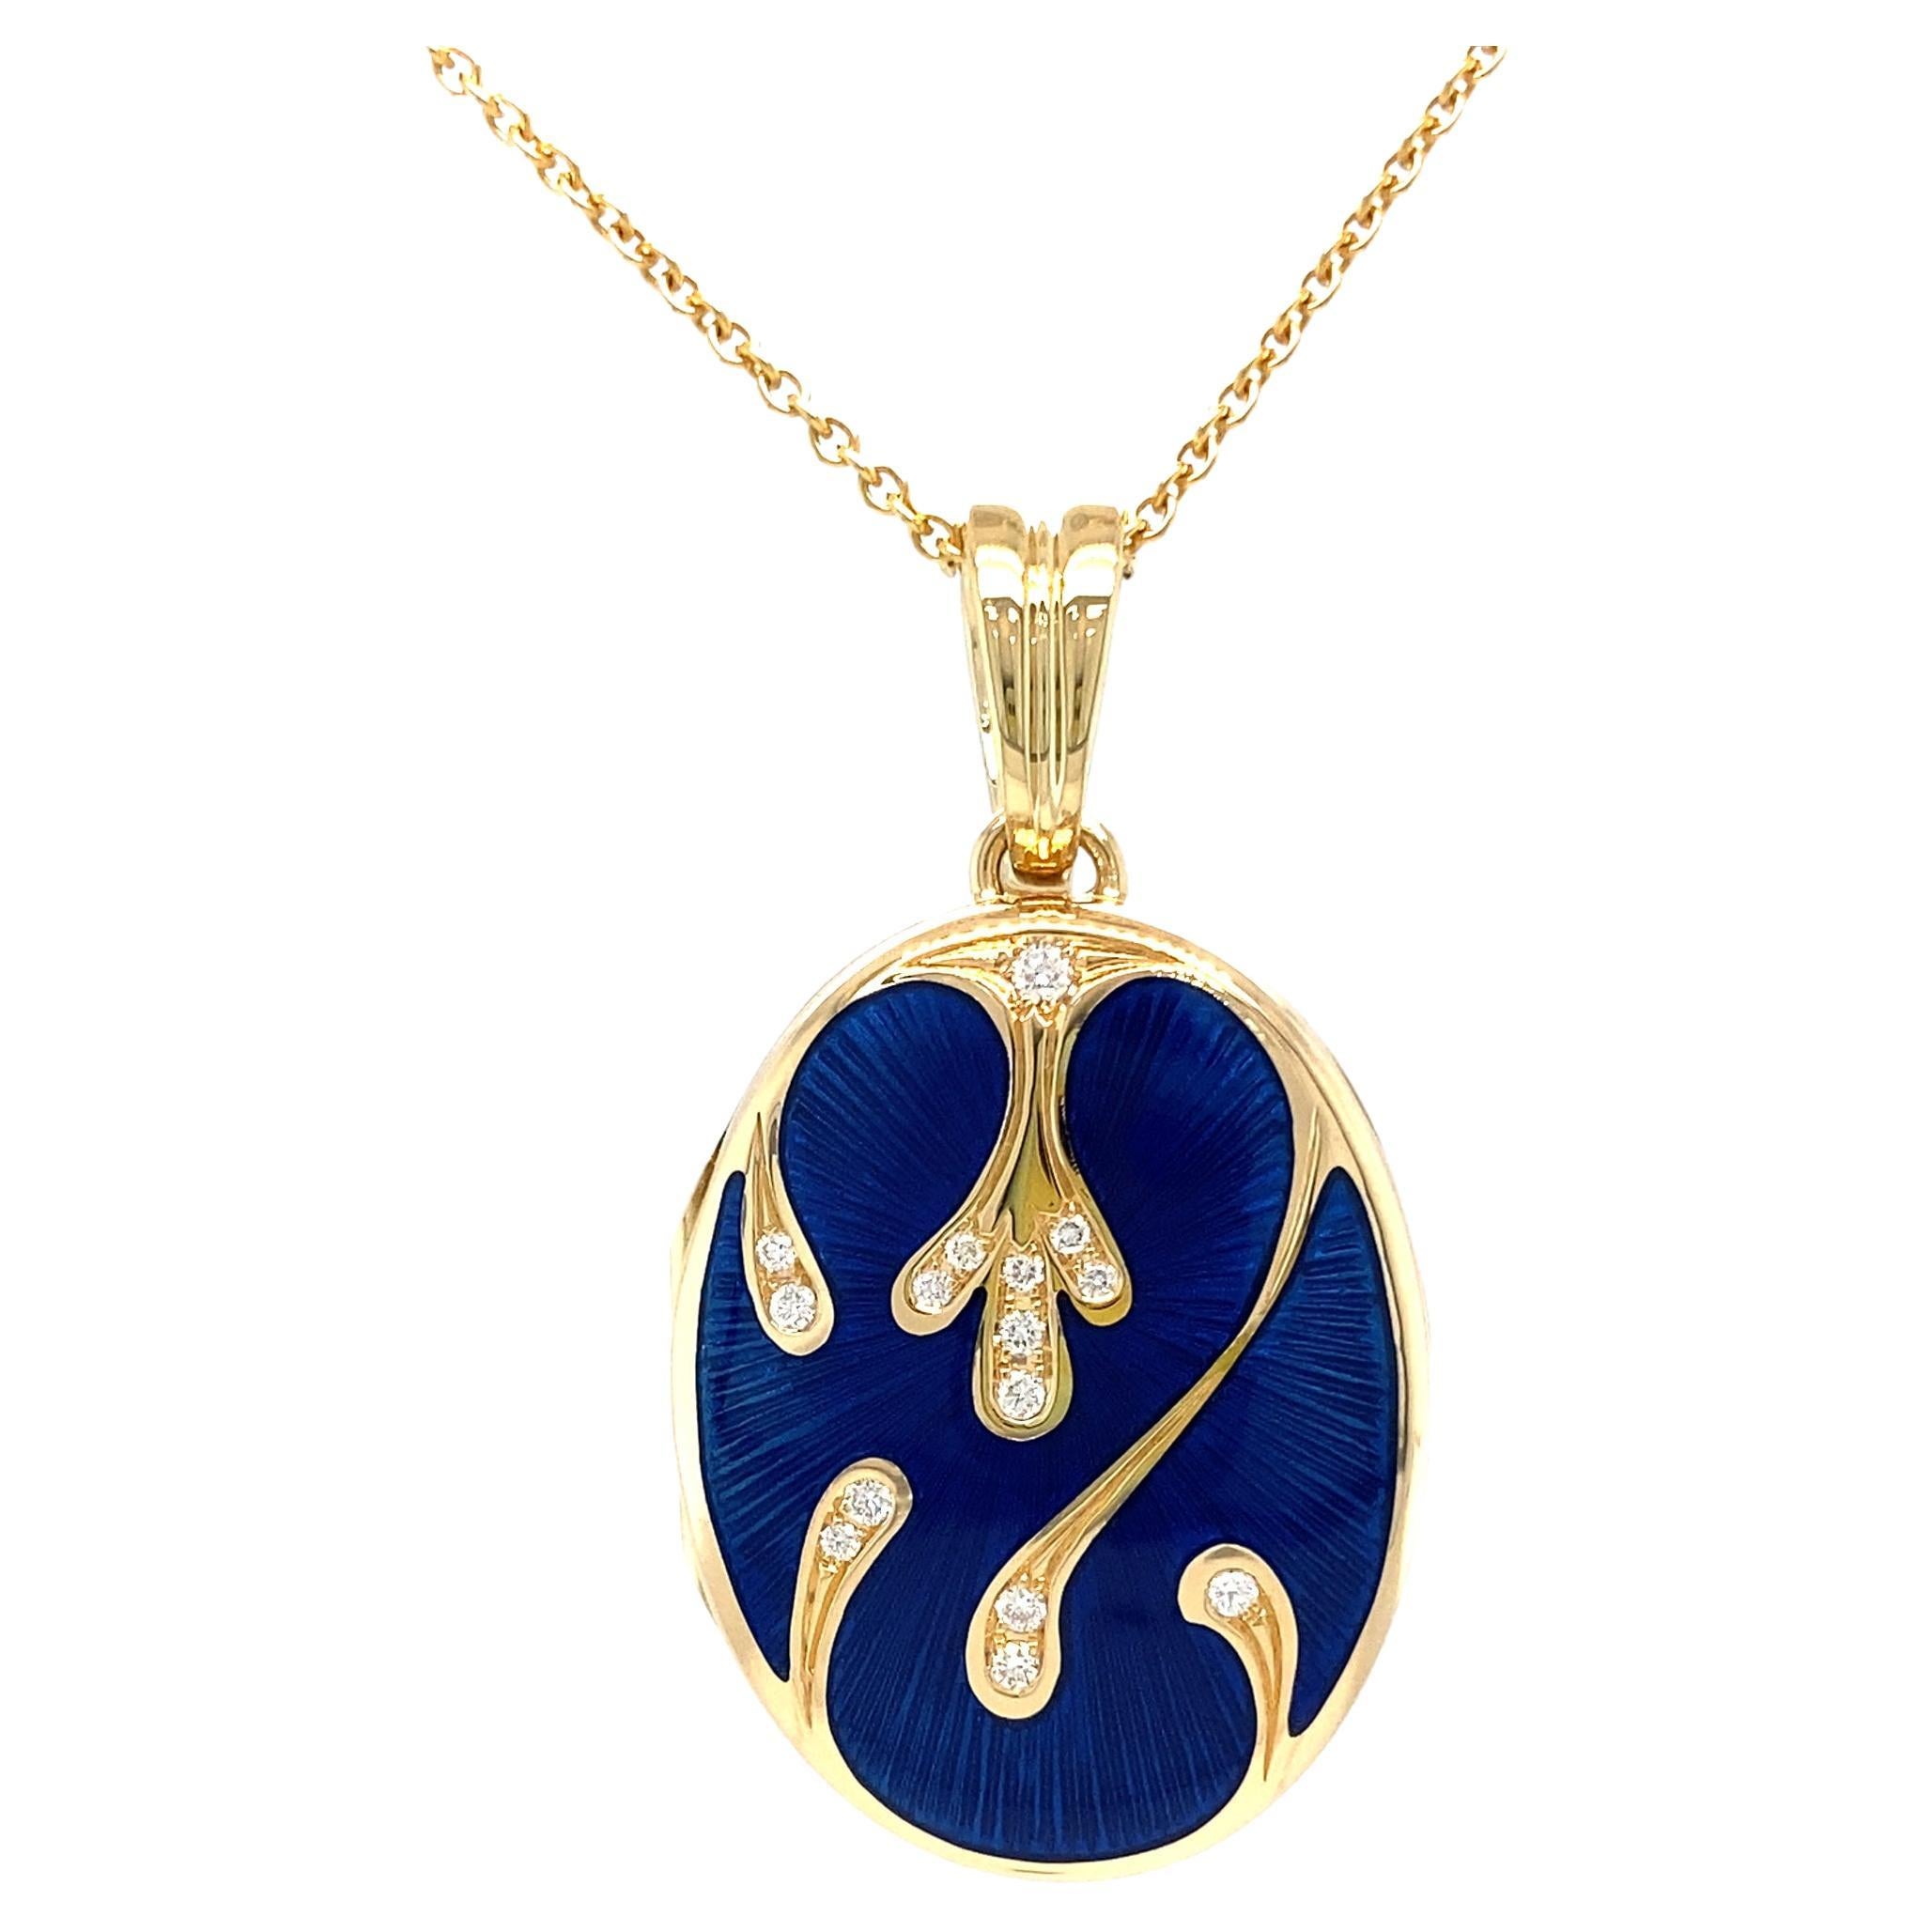 Oval Locket Pendant Necklace - 18k Yellow Gold - Blue Enamel 15 Diamonds 0.16 ct For Sale